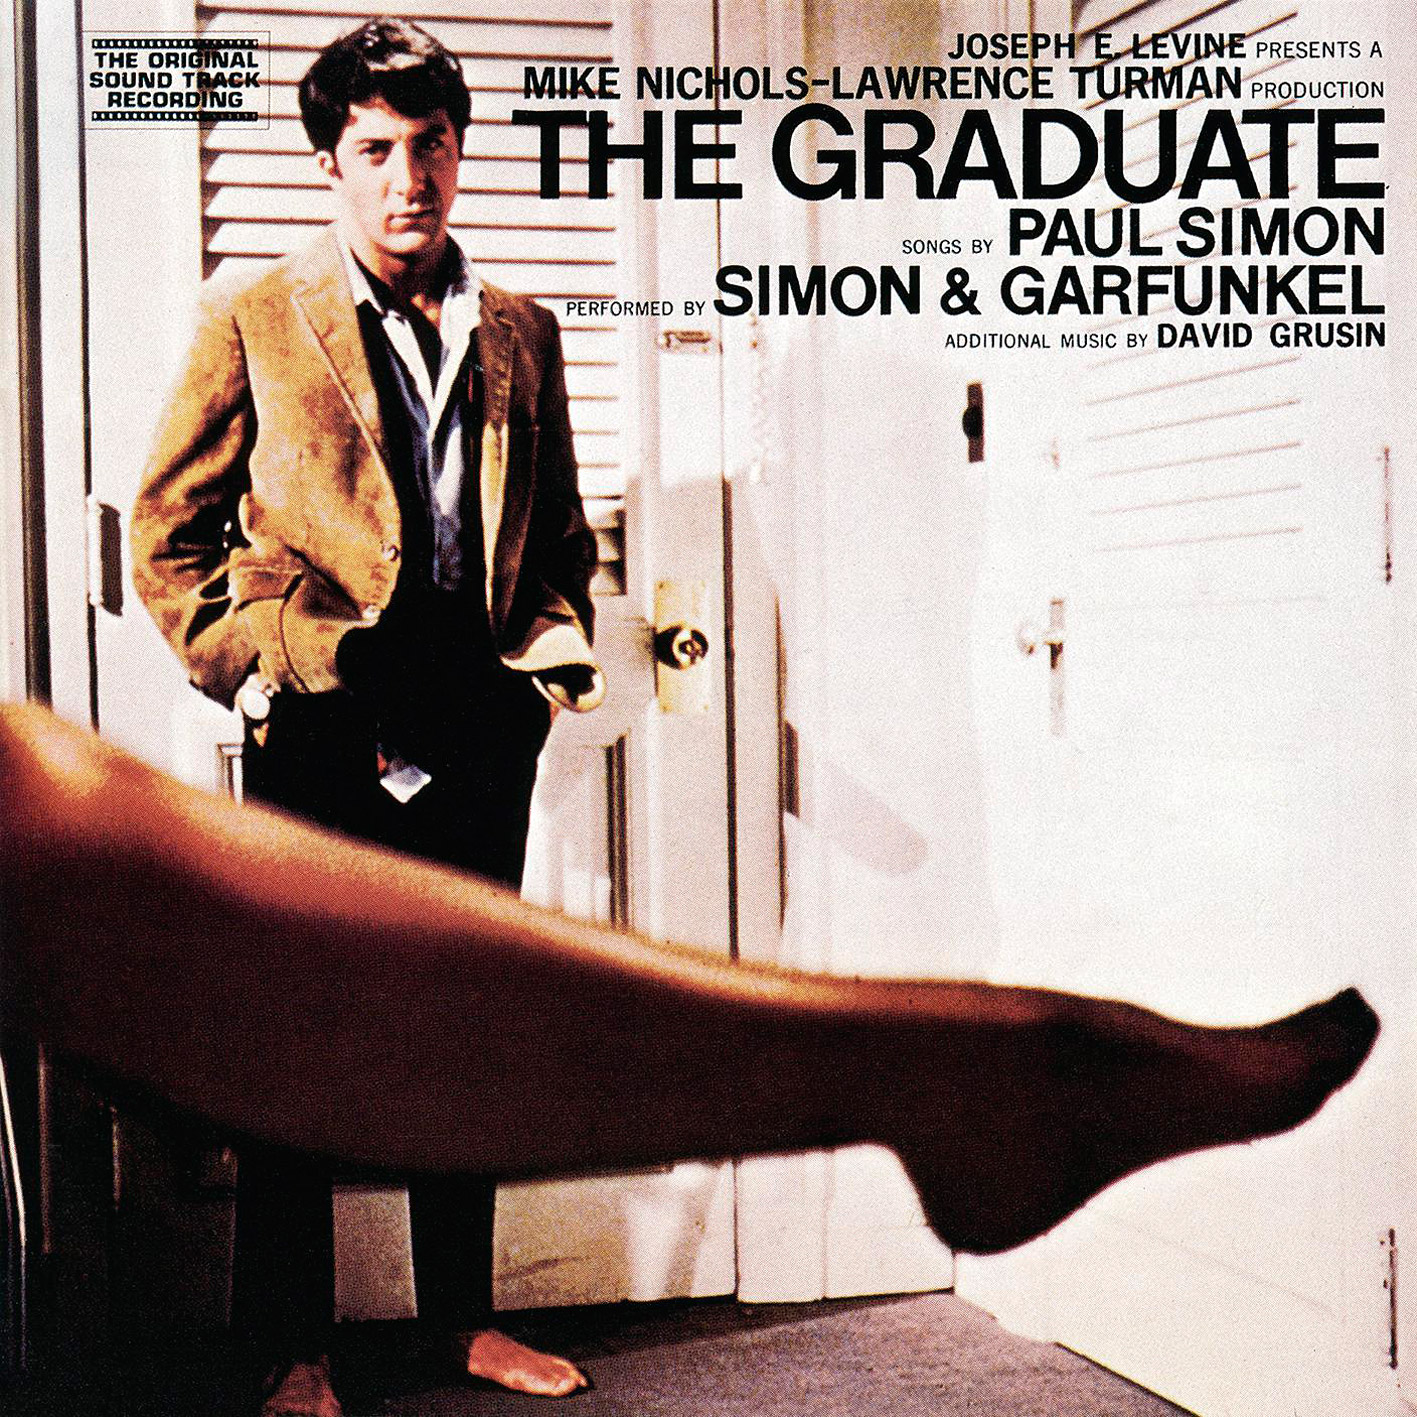 Simon & Garfunkel – The Graduate OST (1968/2014) [HDTracks FLAC 24bit/192kHz]